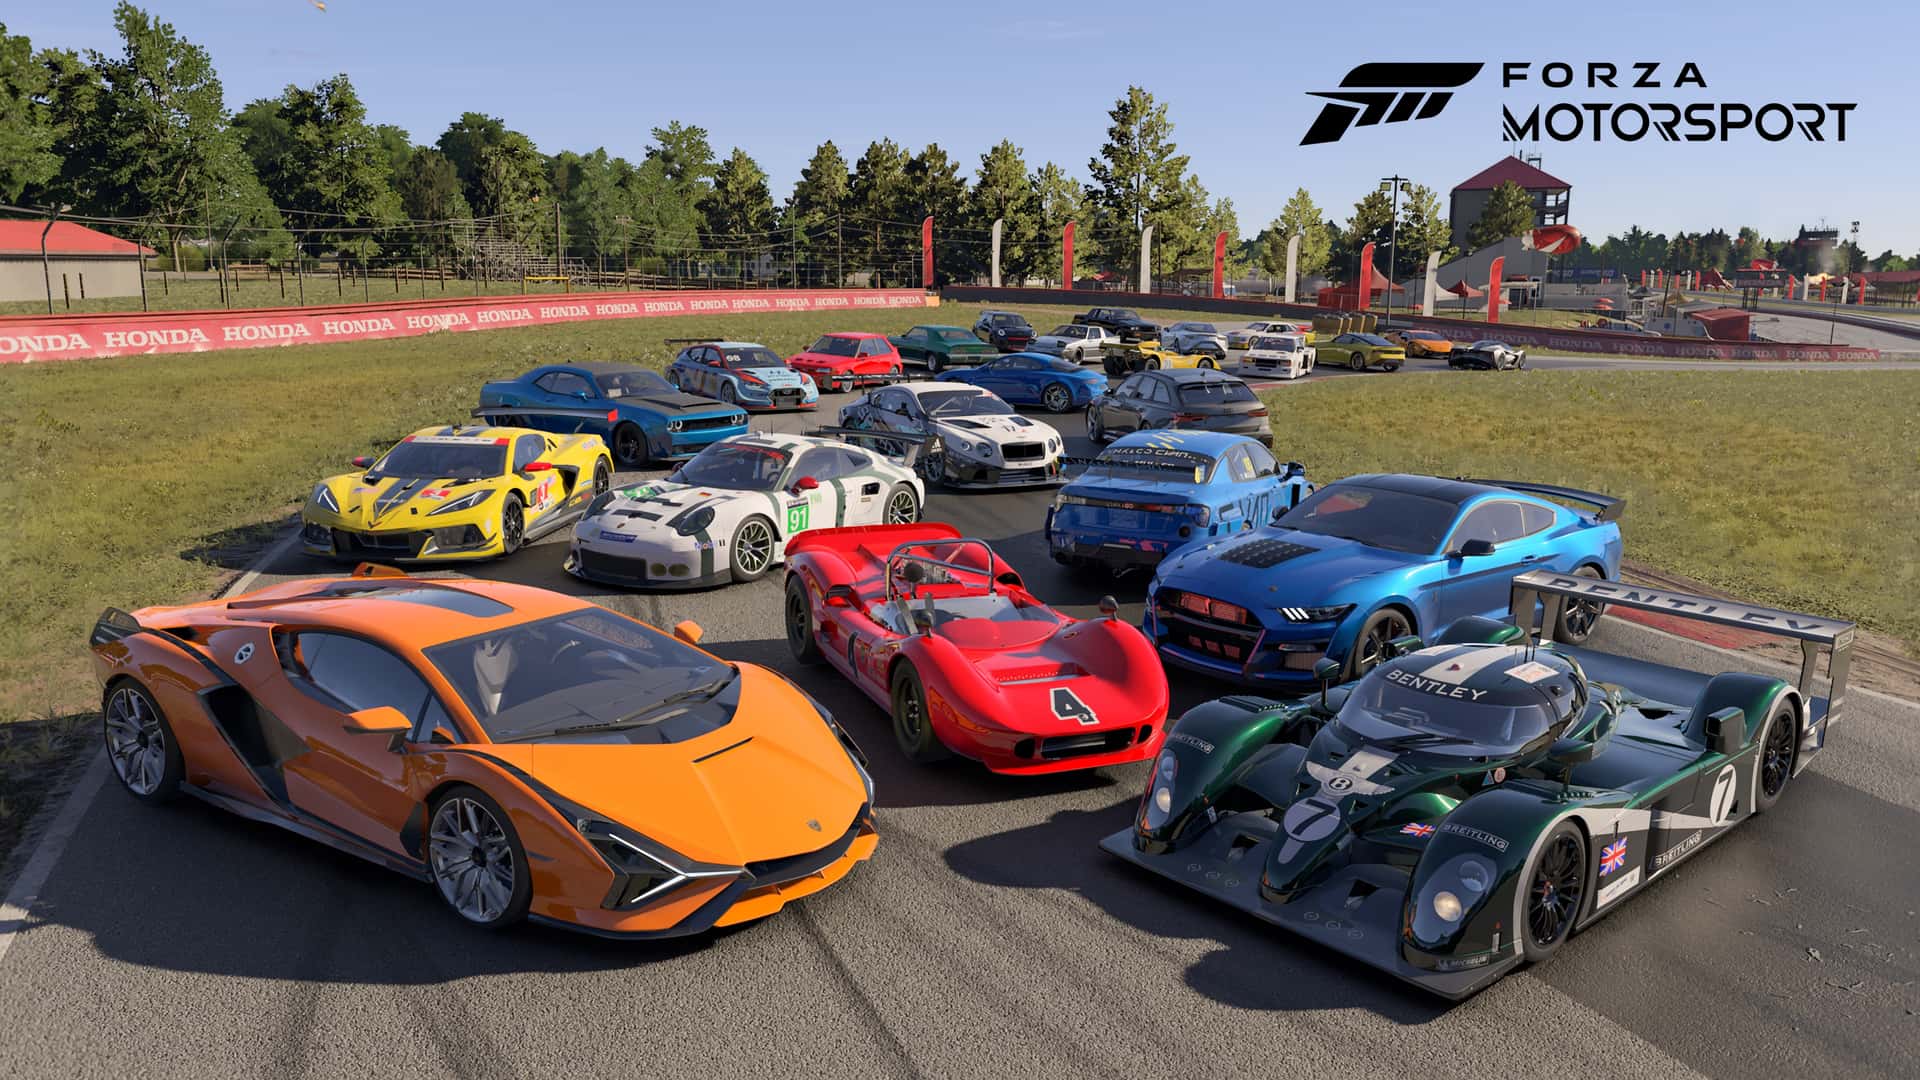 Forza Motorsport 8 será anunciado oficialmente em 2020 - XBOXERS